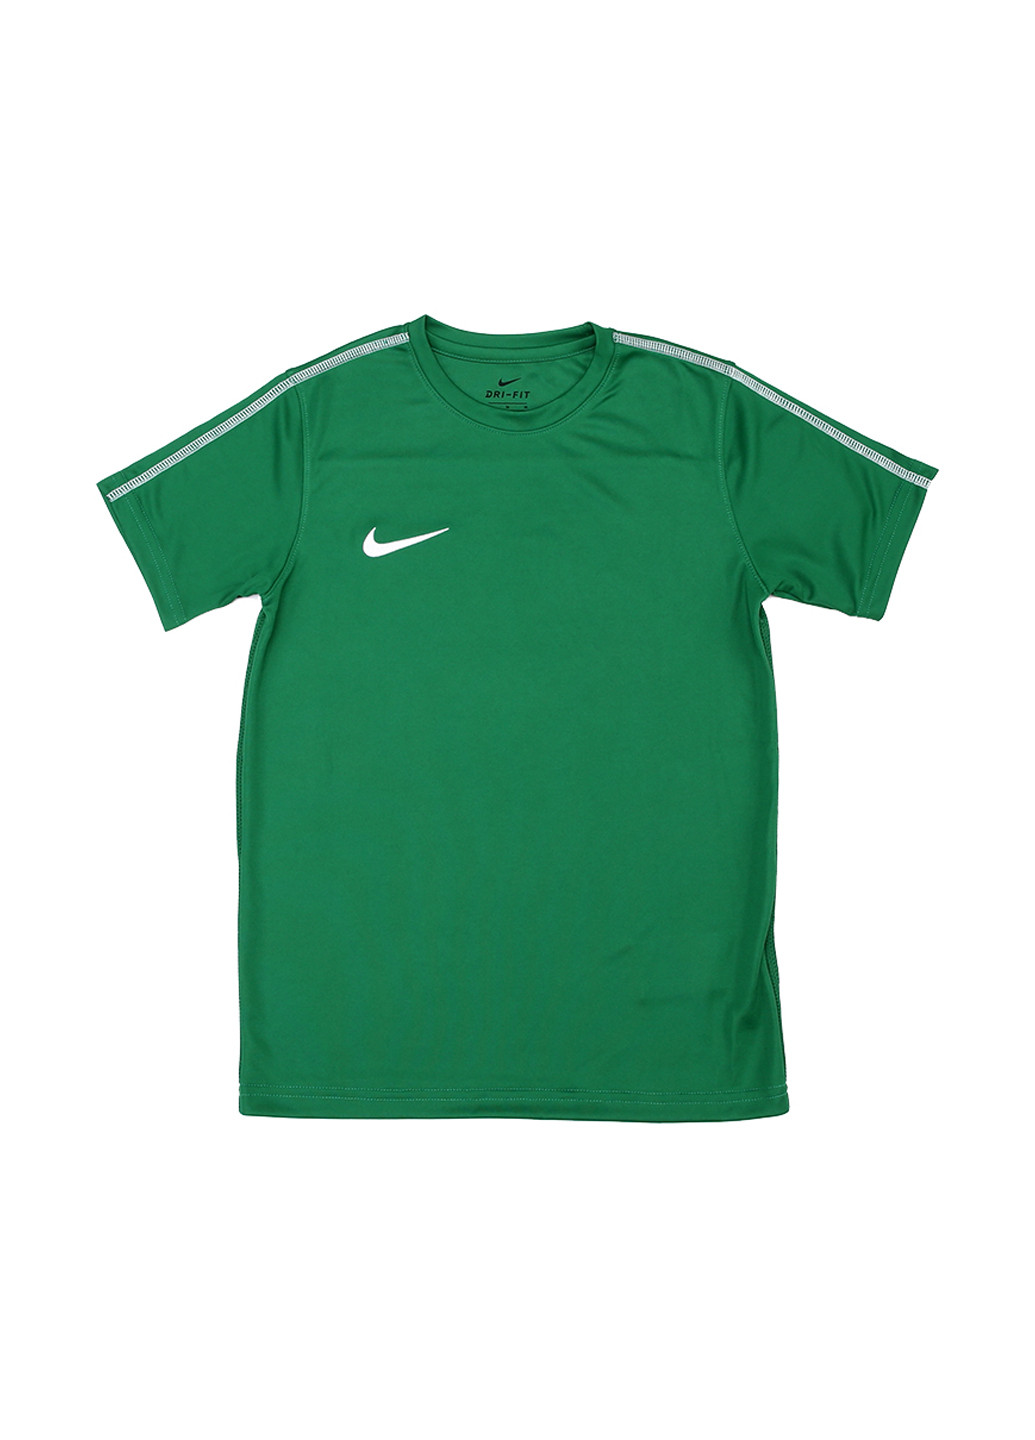 Зеленая демисезонная футболка Nike TRAINING TOP P A R K 1 8